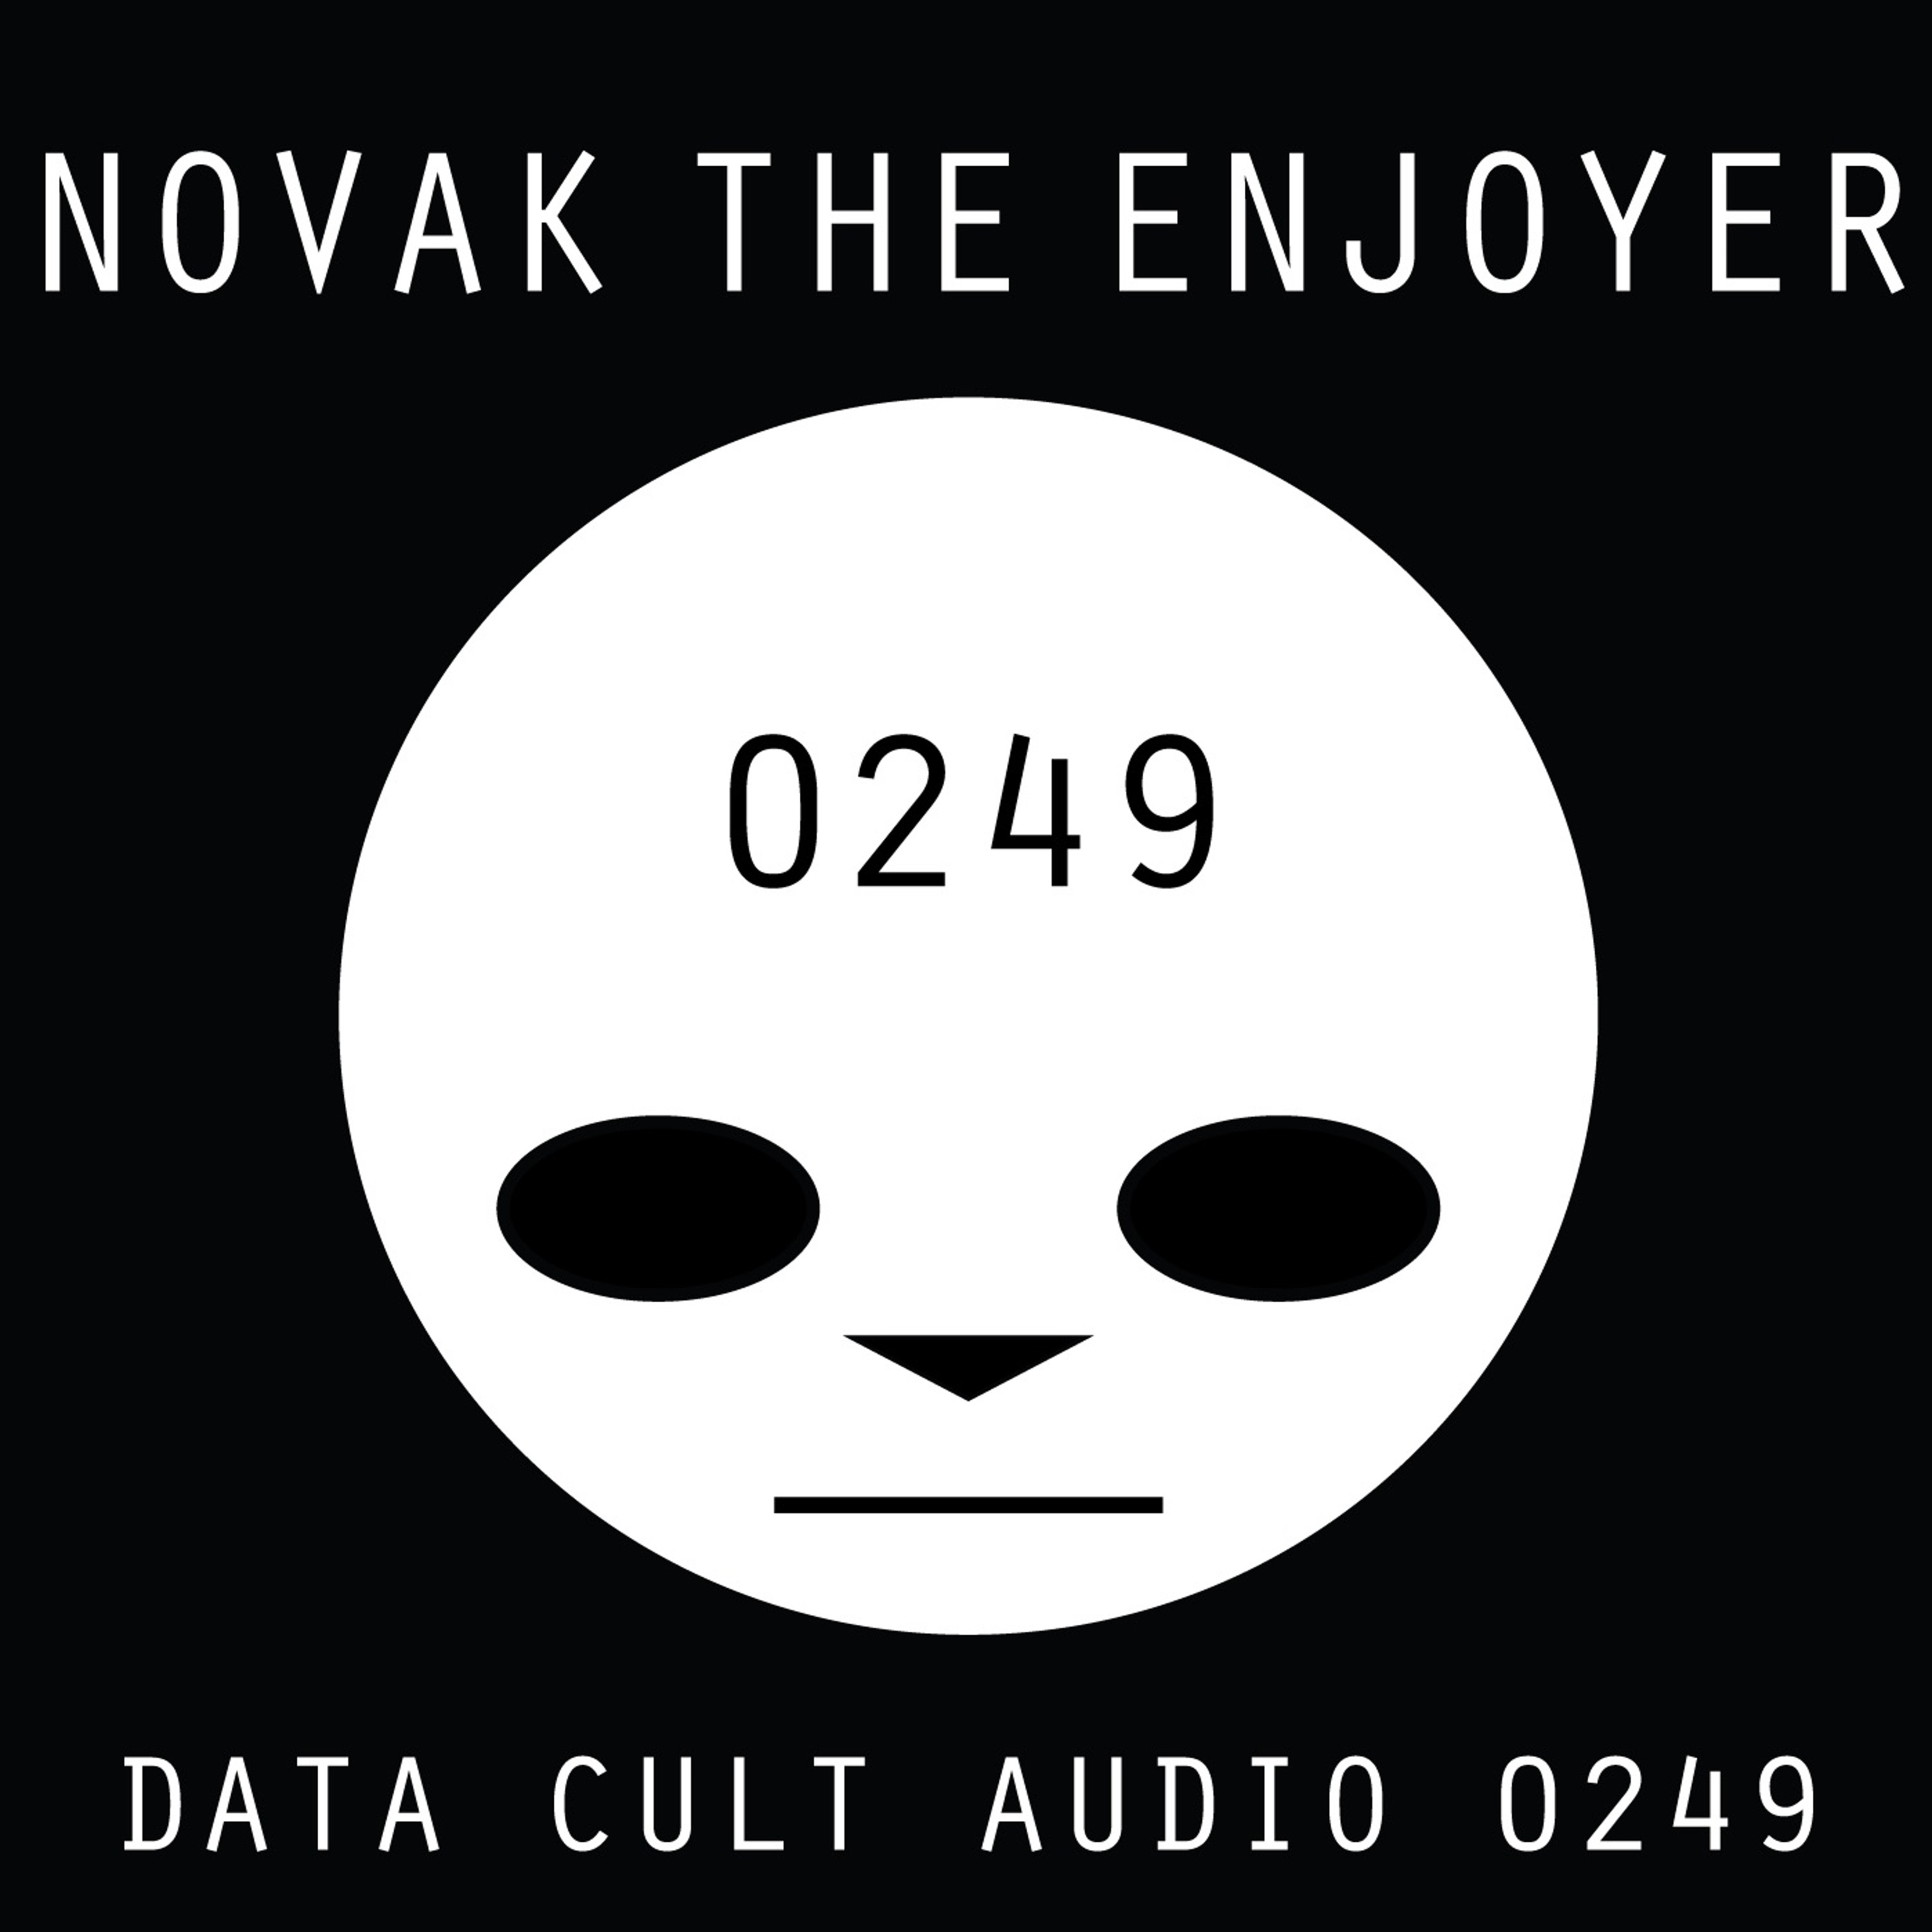 Data Cult Audio 0249 - Novak The Enjoyer